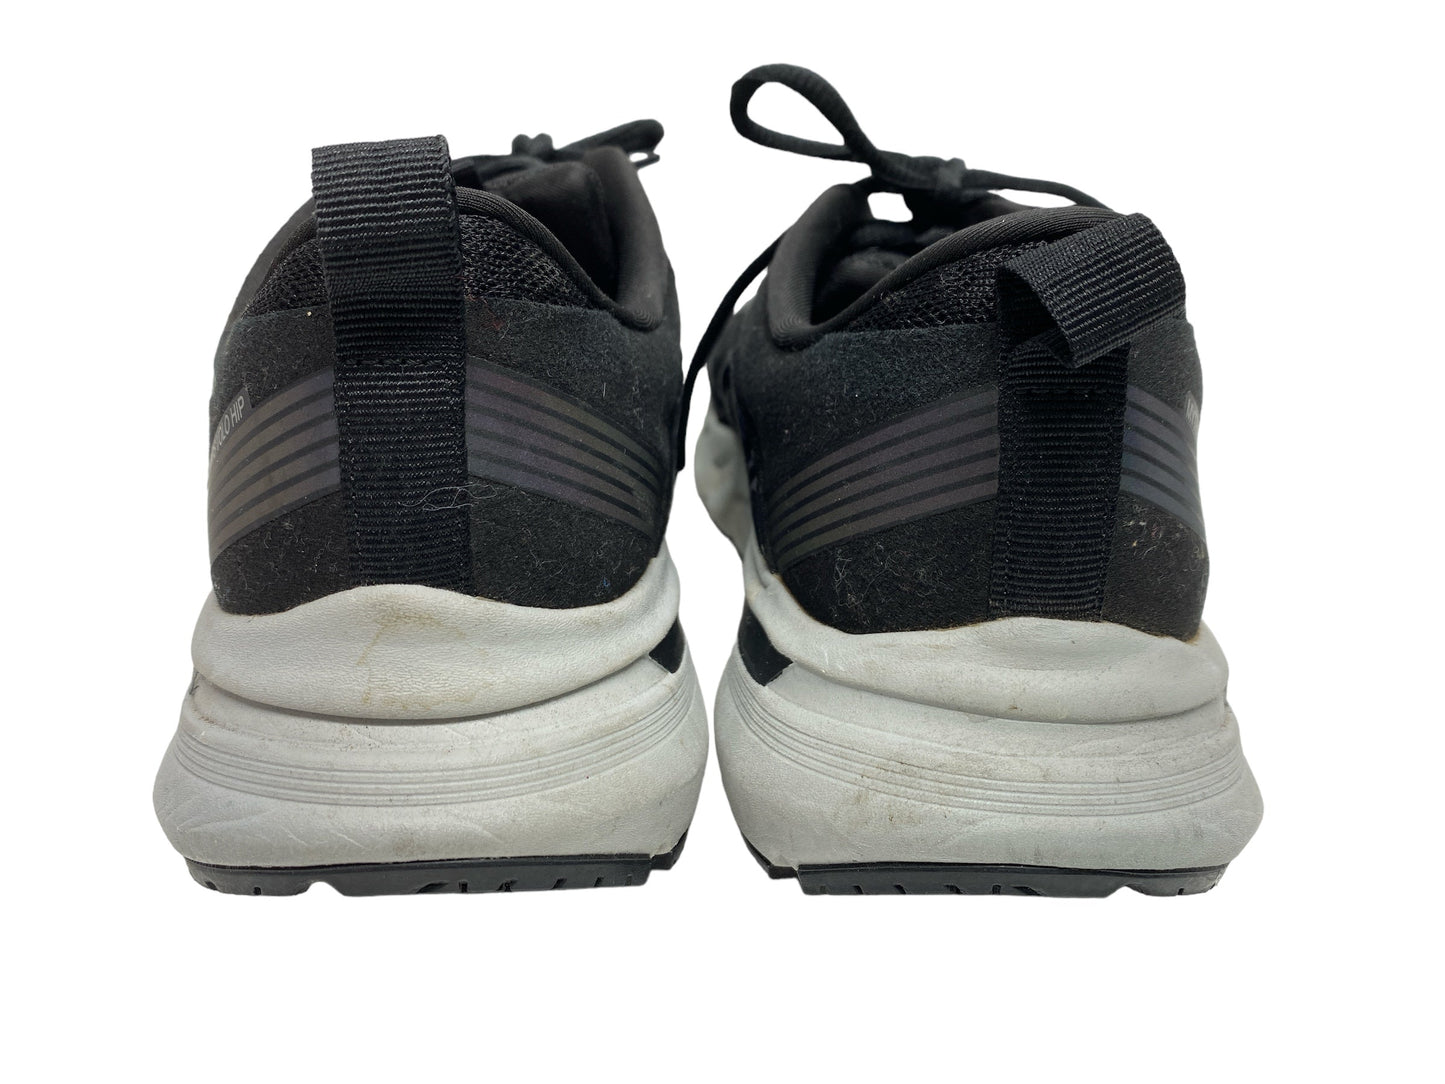 Black Shoes Athletic Diadora Blue Shield, Size 7.5